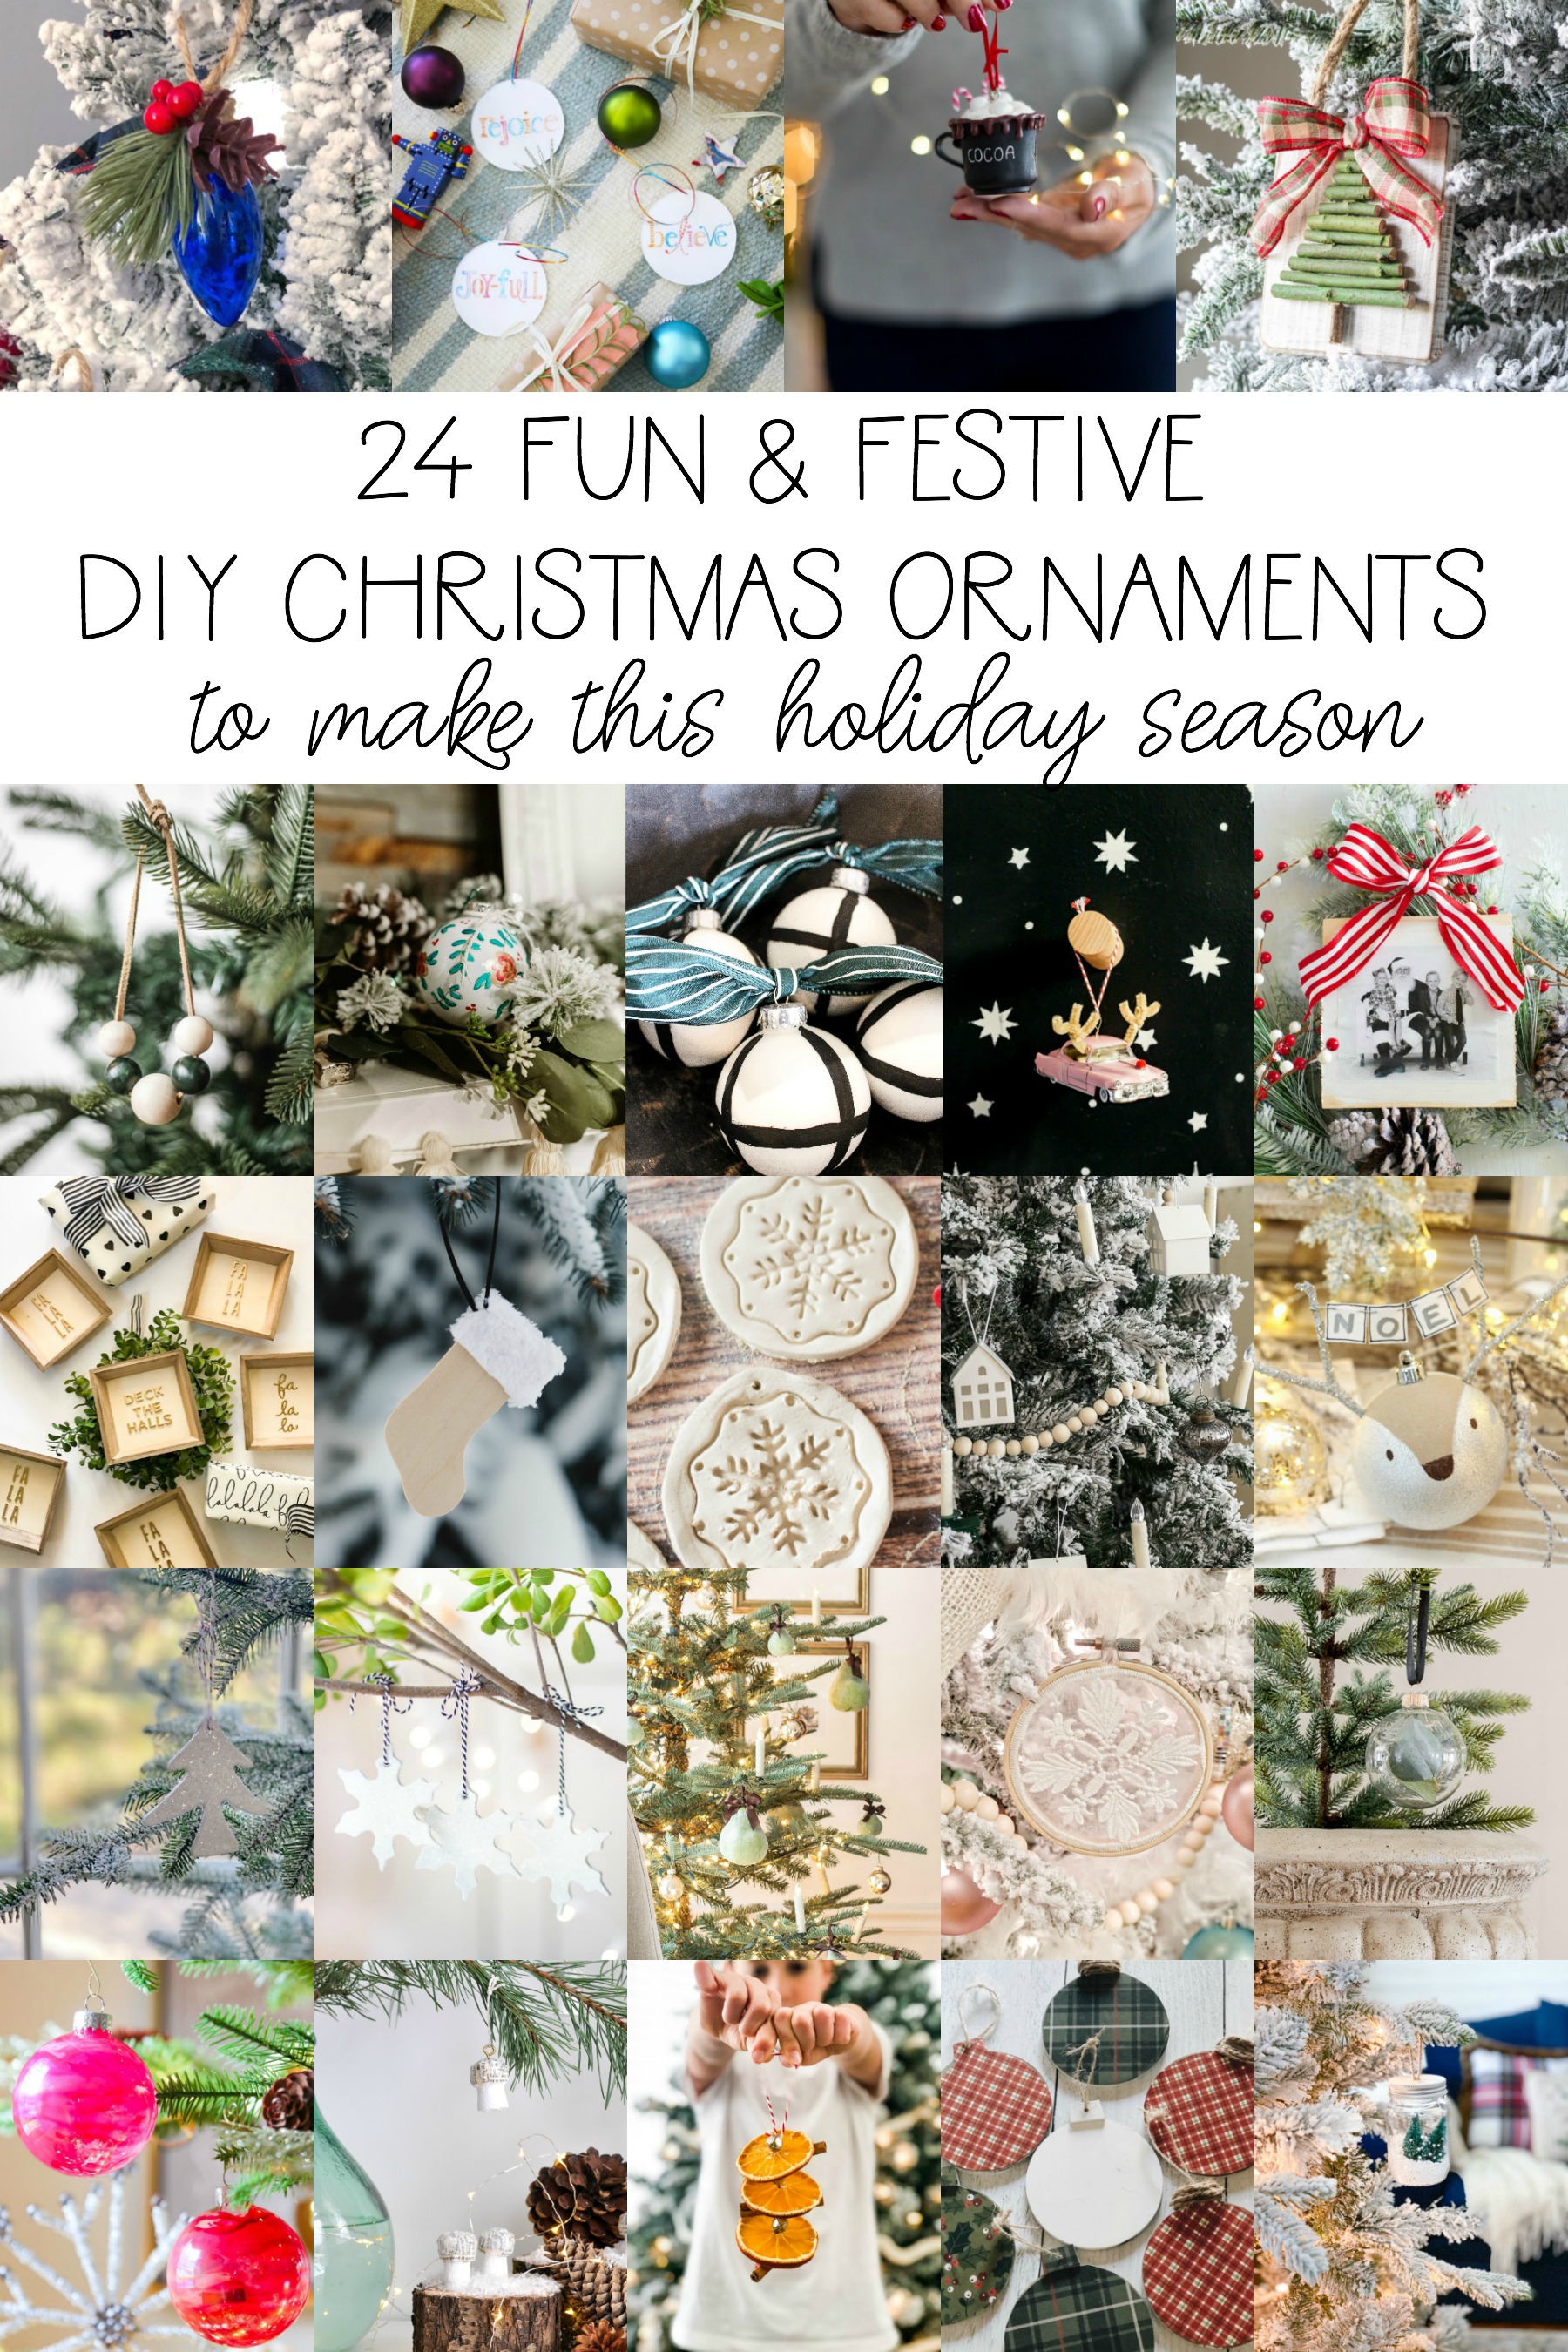 24 Fun & Festive DIY Christmas Ornaments poster.